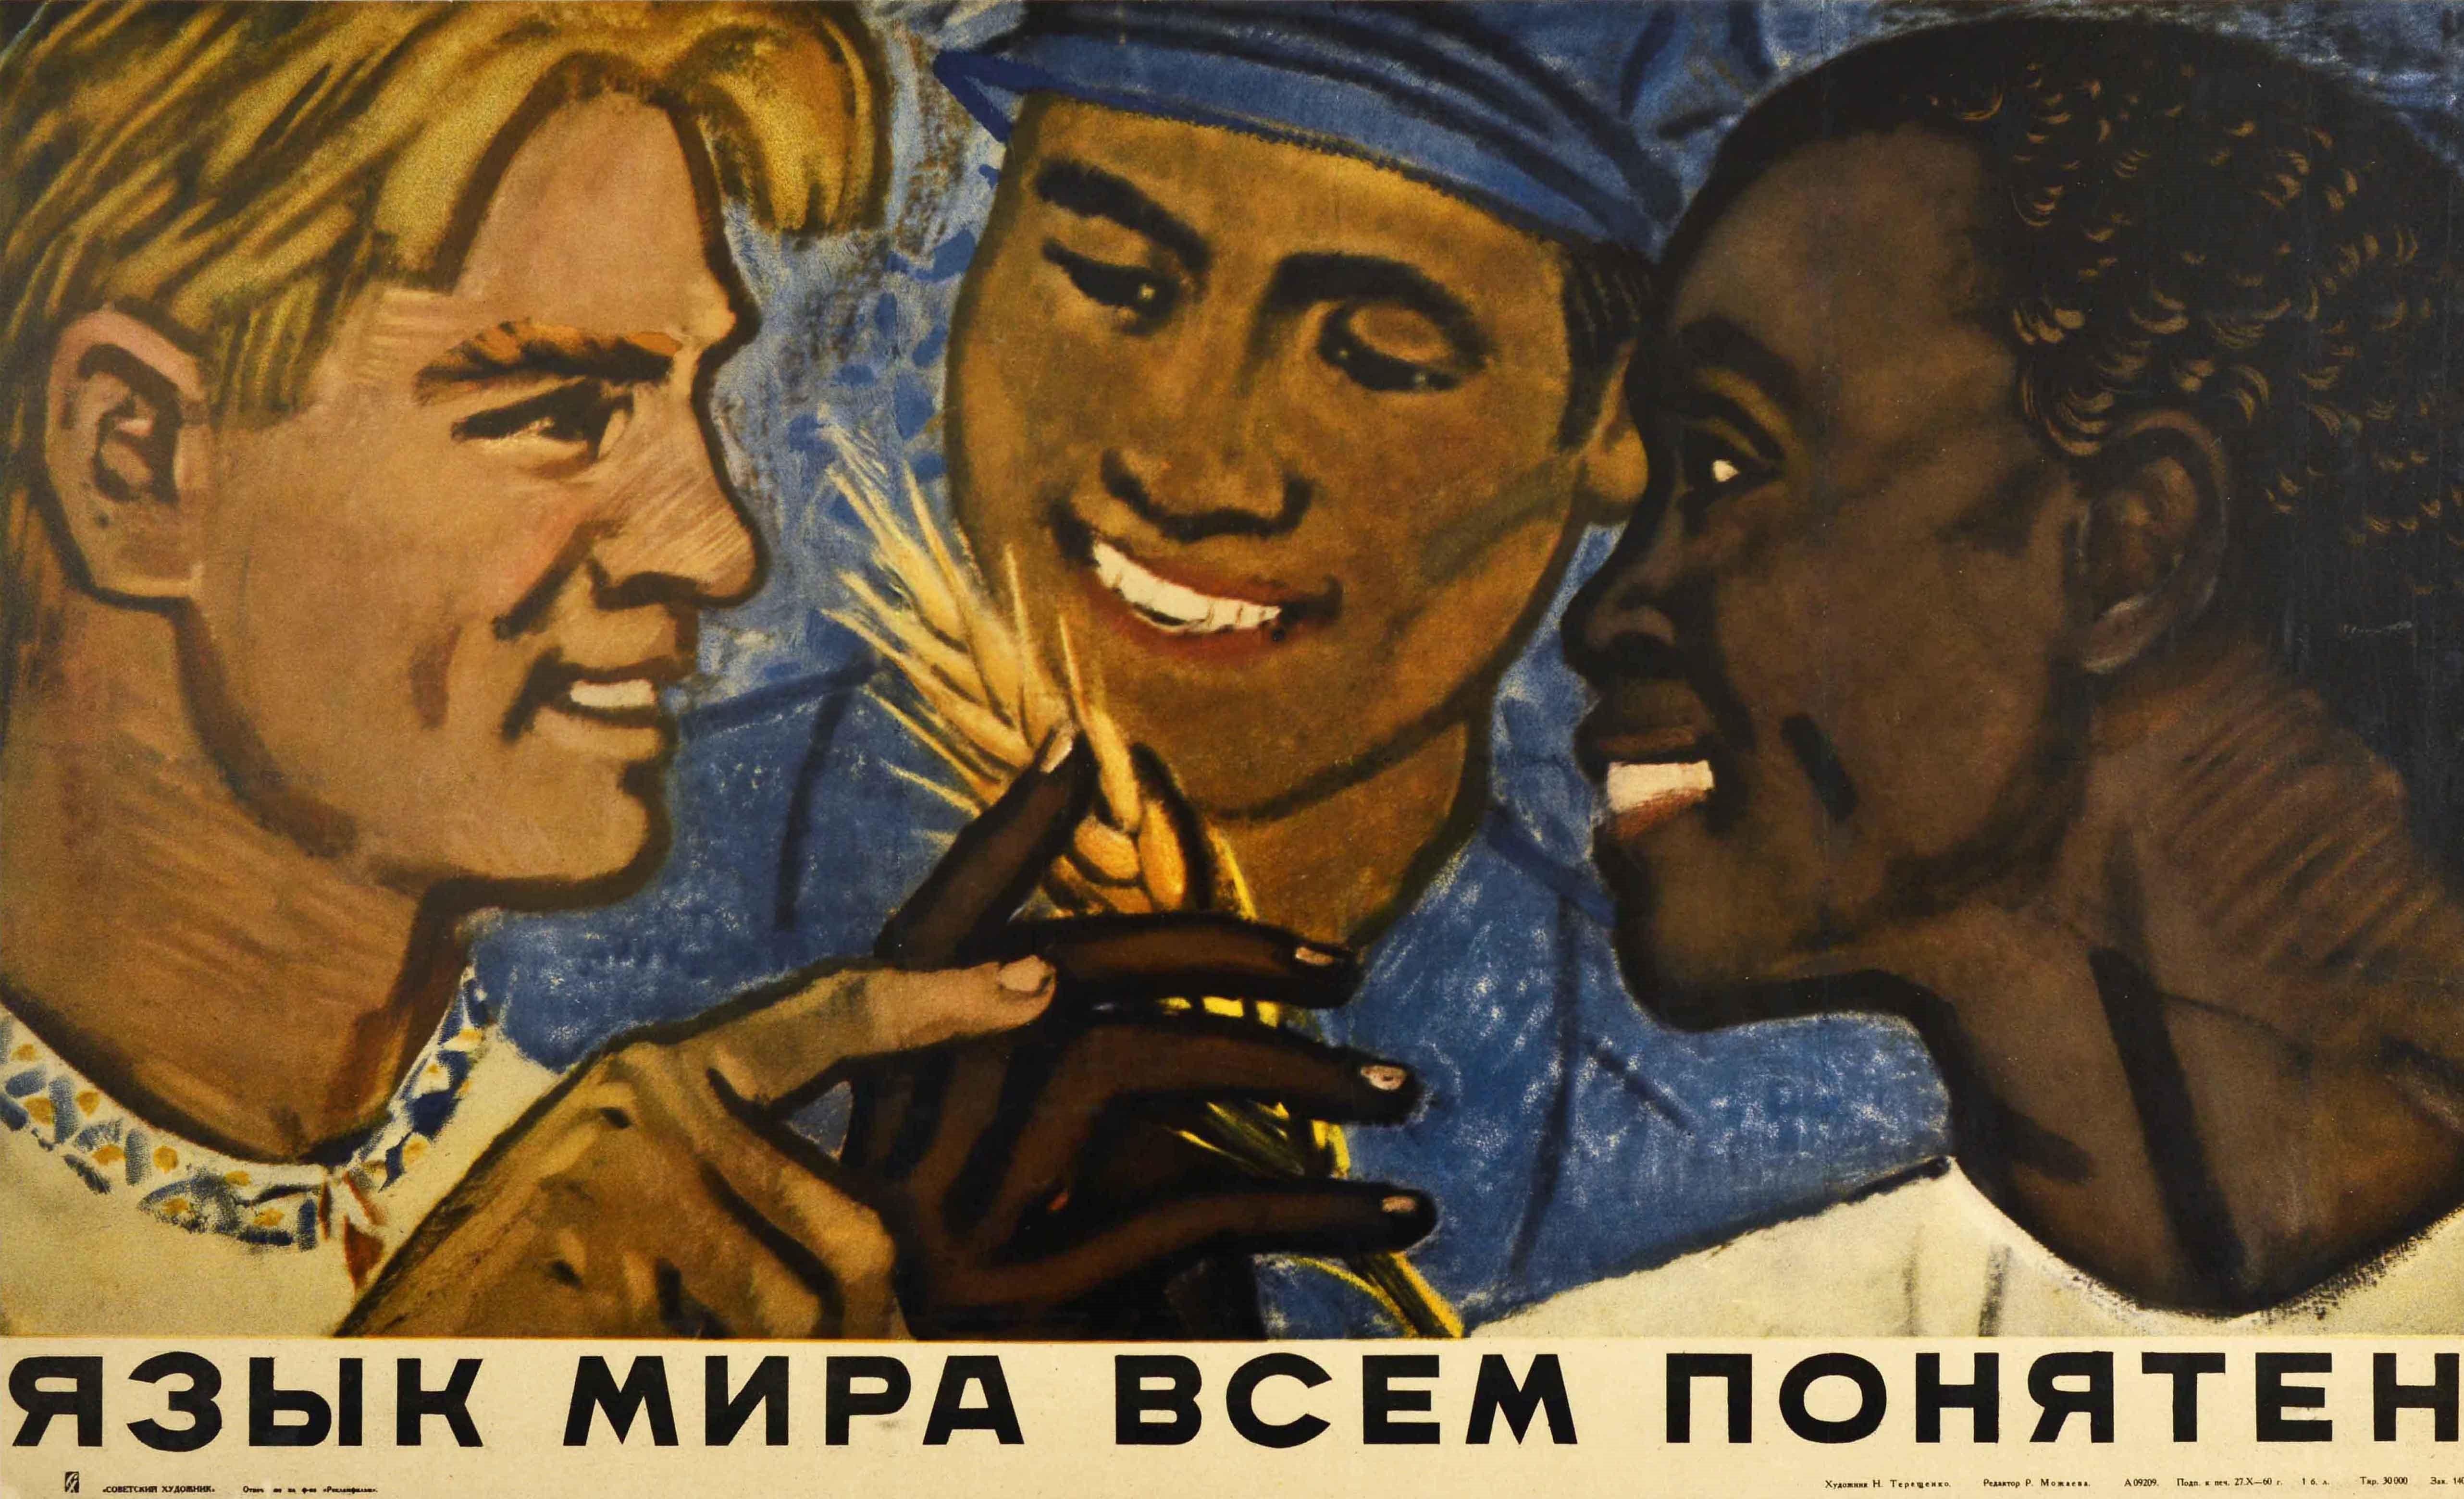 Mid-20th Century Original Vintage Soviet Poster Language Of Peace World Friendship Unity USSR